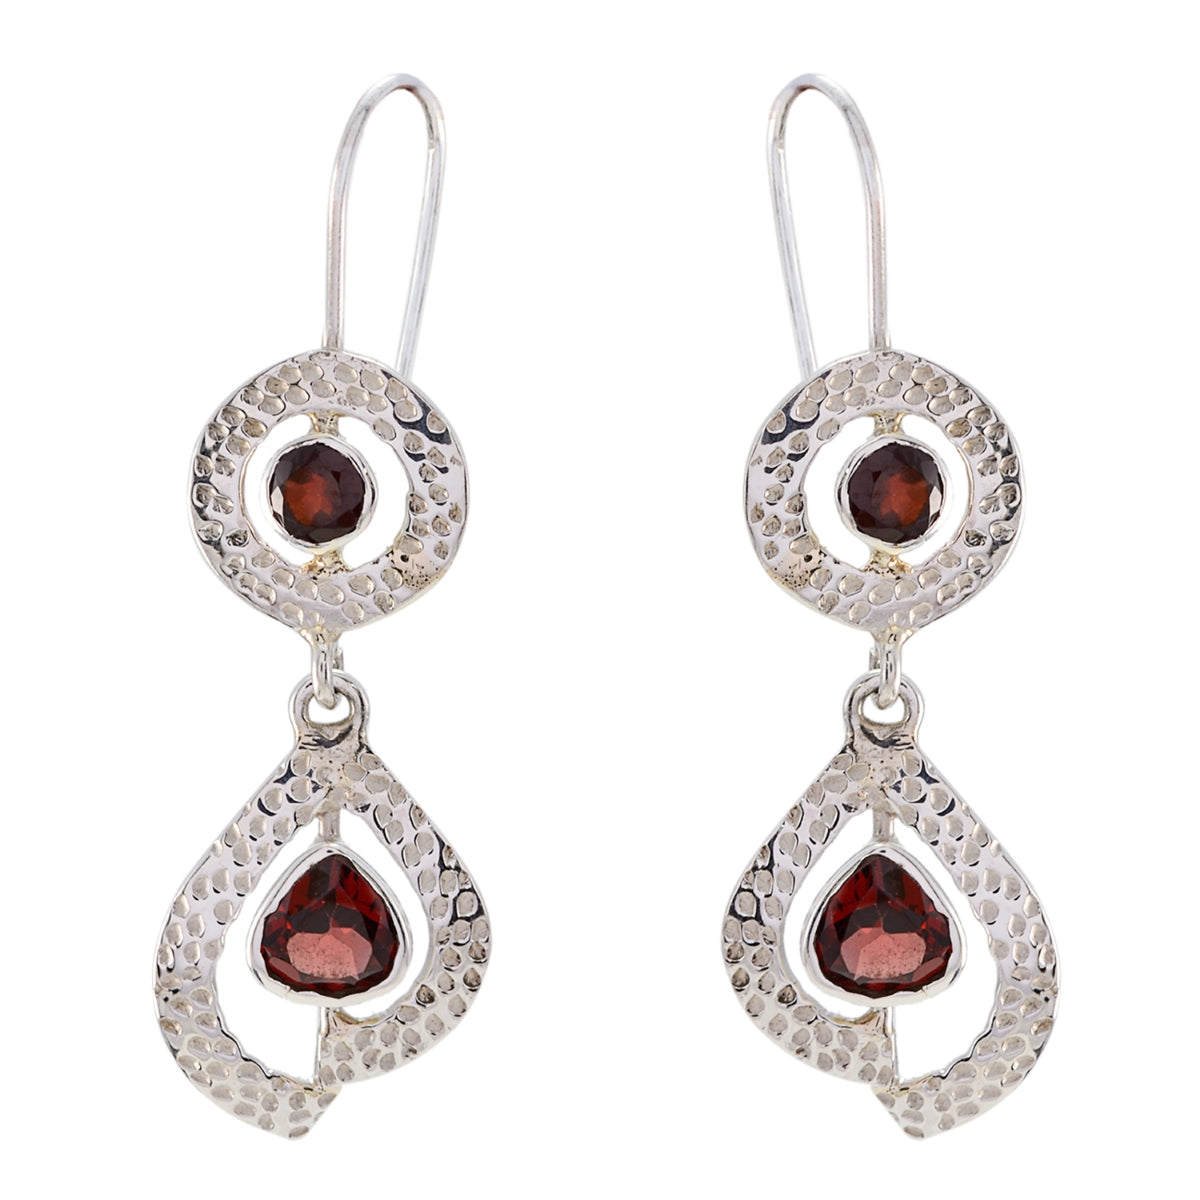 Riyo Good Gemstones multi shape Faceted Red Garnet Silver Earrings cyber Monday gift